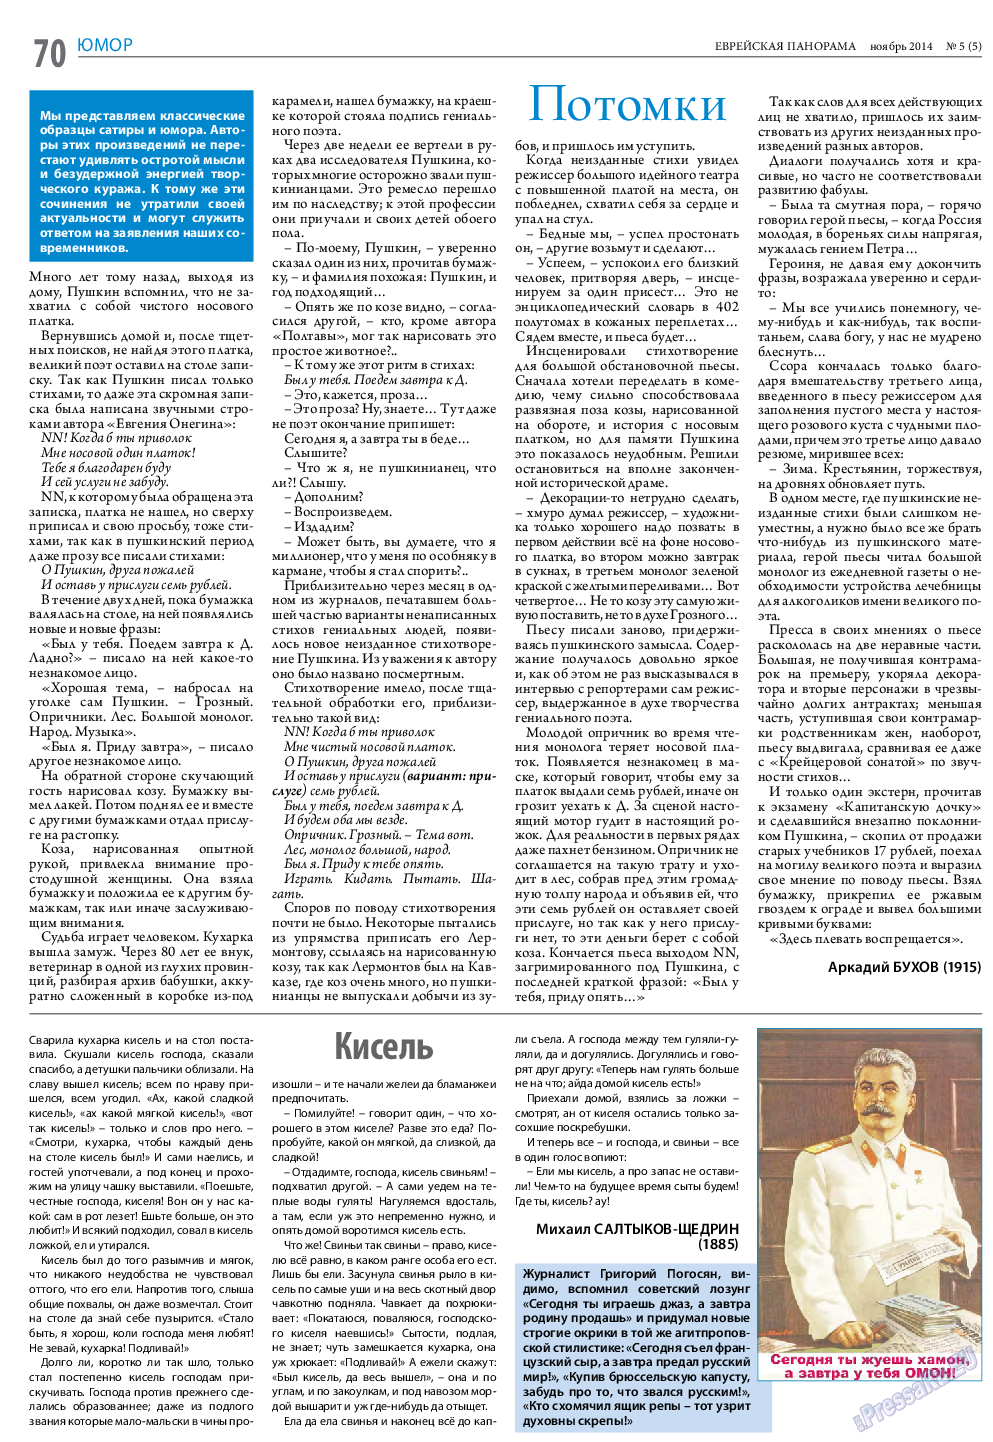 Еврейская панорама, газета. 2014 №5 стр.70